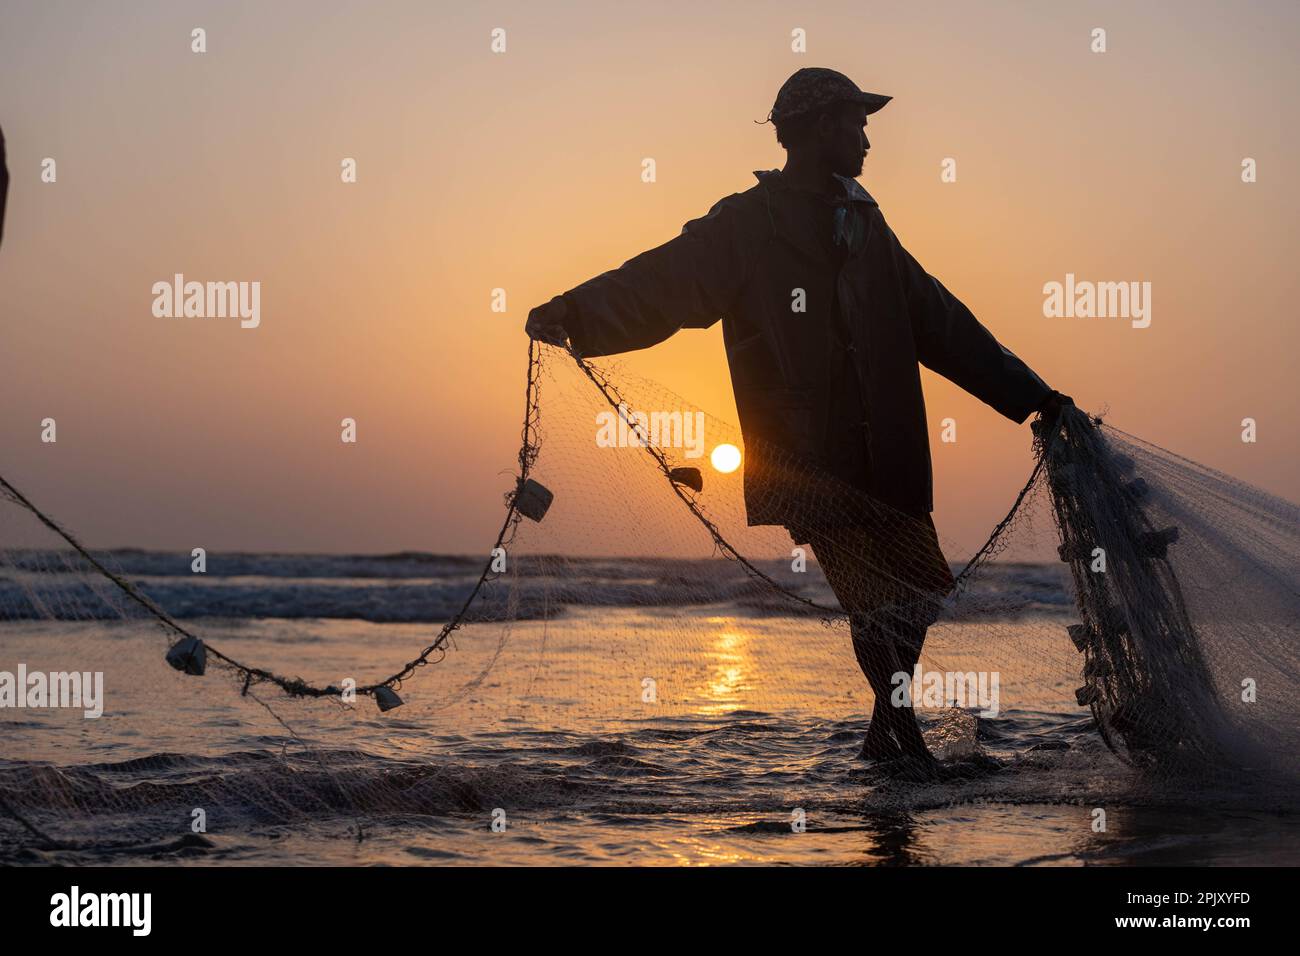 https://c8.alamy.com/comp/2PJXYFD/karachi-pakistan-2021-a-fisherman-pulling-fishing-net-to-catch-fish-at-sea-view-in-evening-time-2PJXYFD.jpg